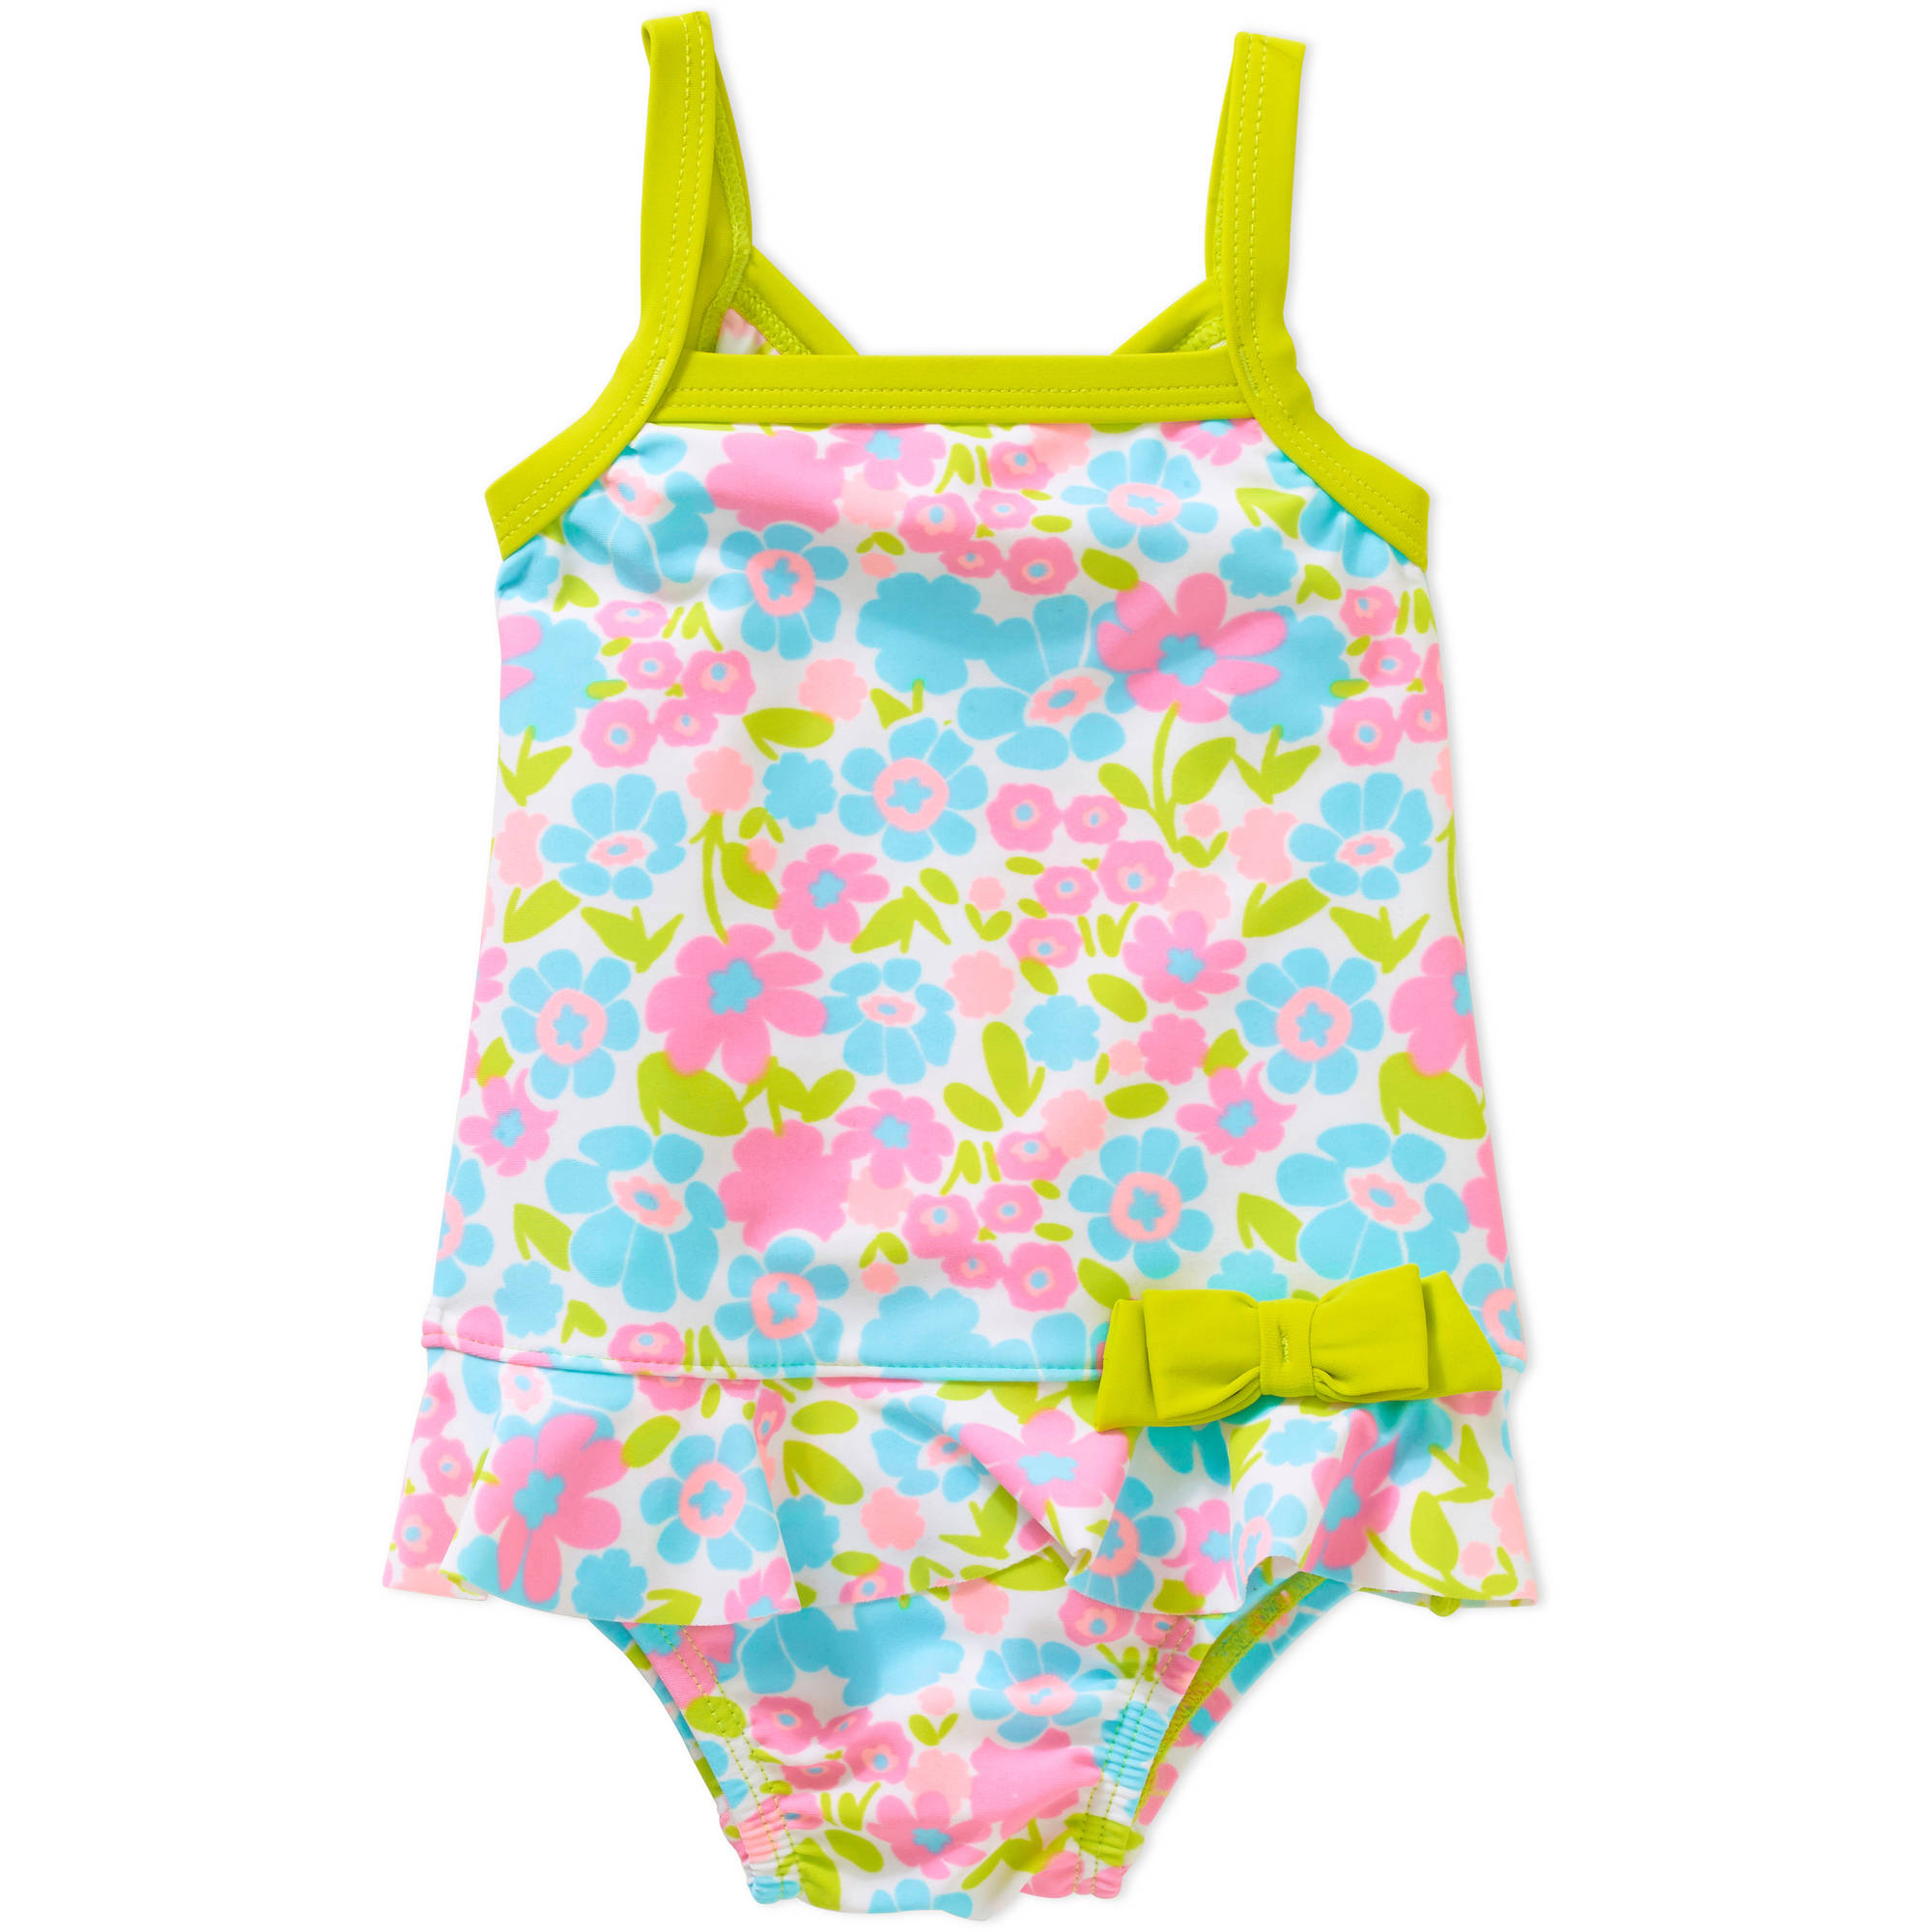 Baby Girls' 1 Piece Swimsuit, Online Exclusive - image 1 of 1